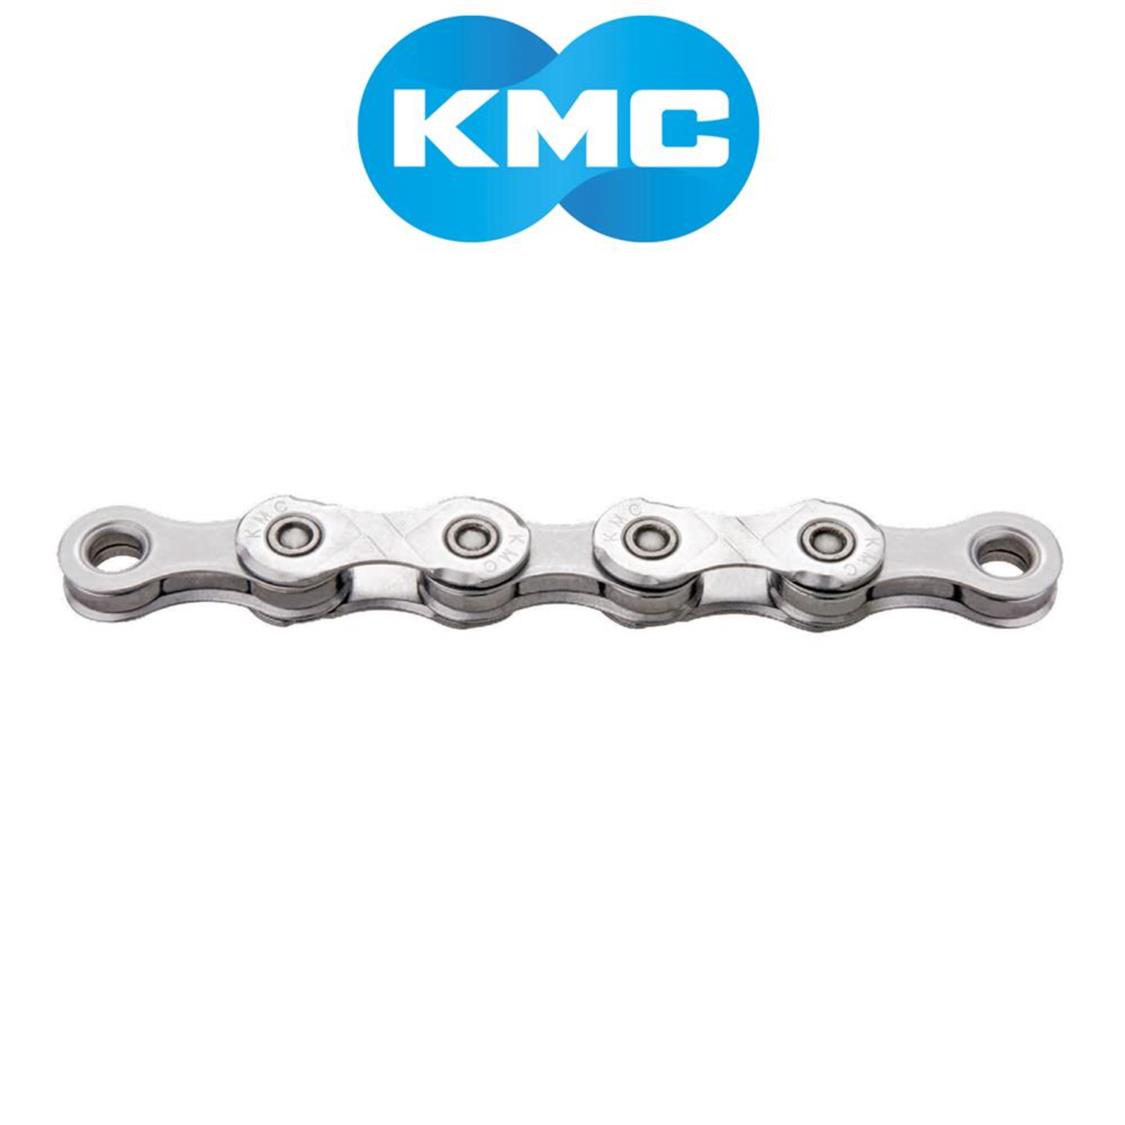 KMC Chain X12 Series 12 Speed silver